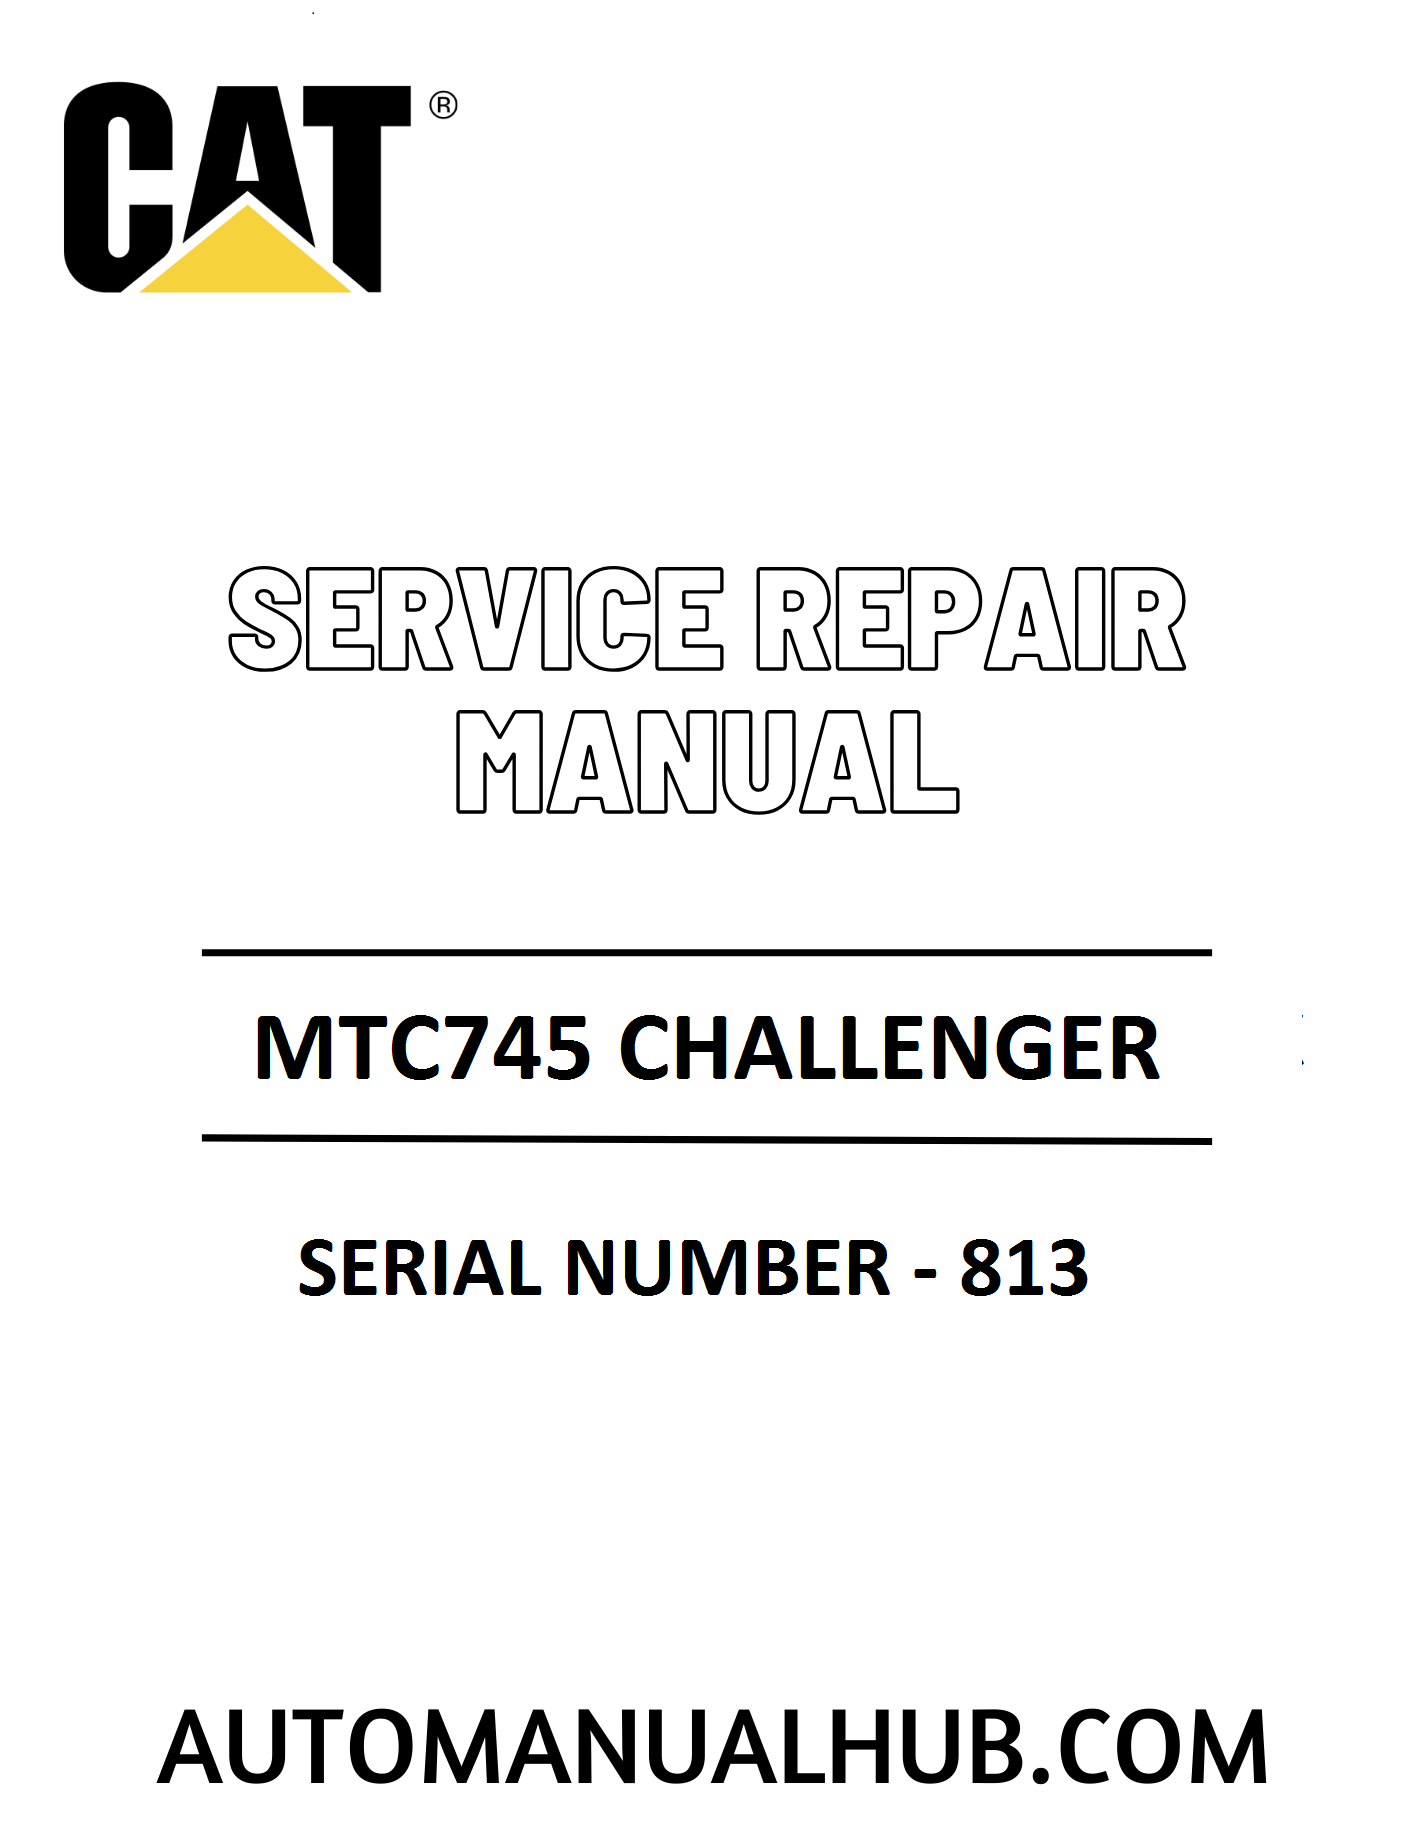 Cat Caterpillar MTC745 Challenger Service Repair Manual 